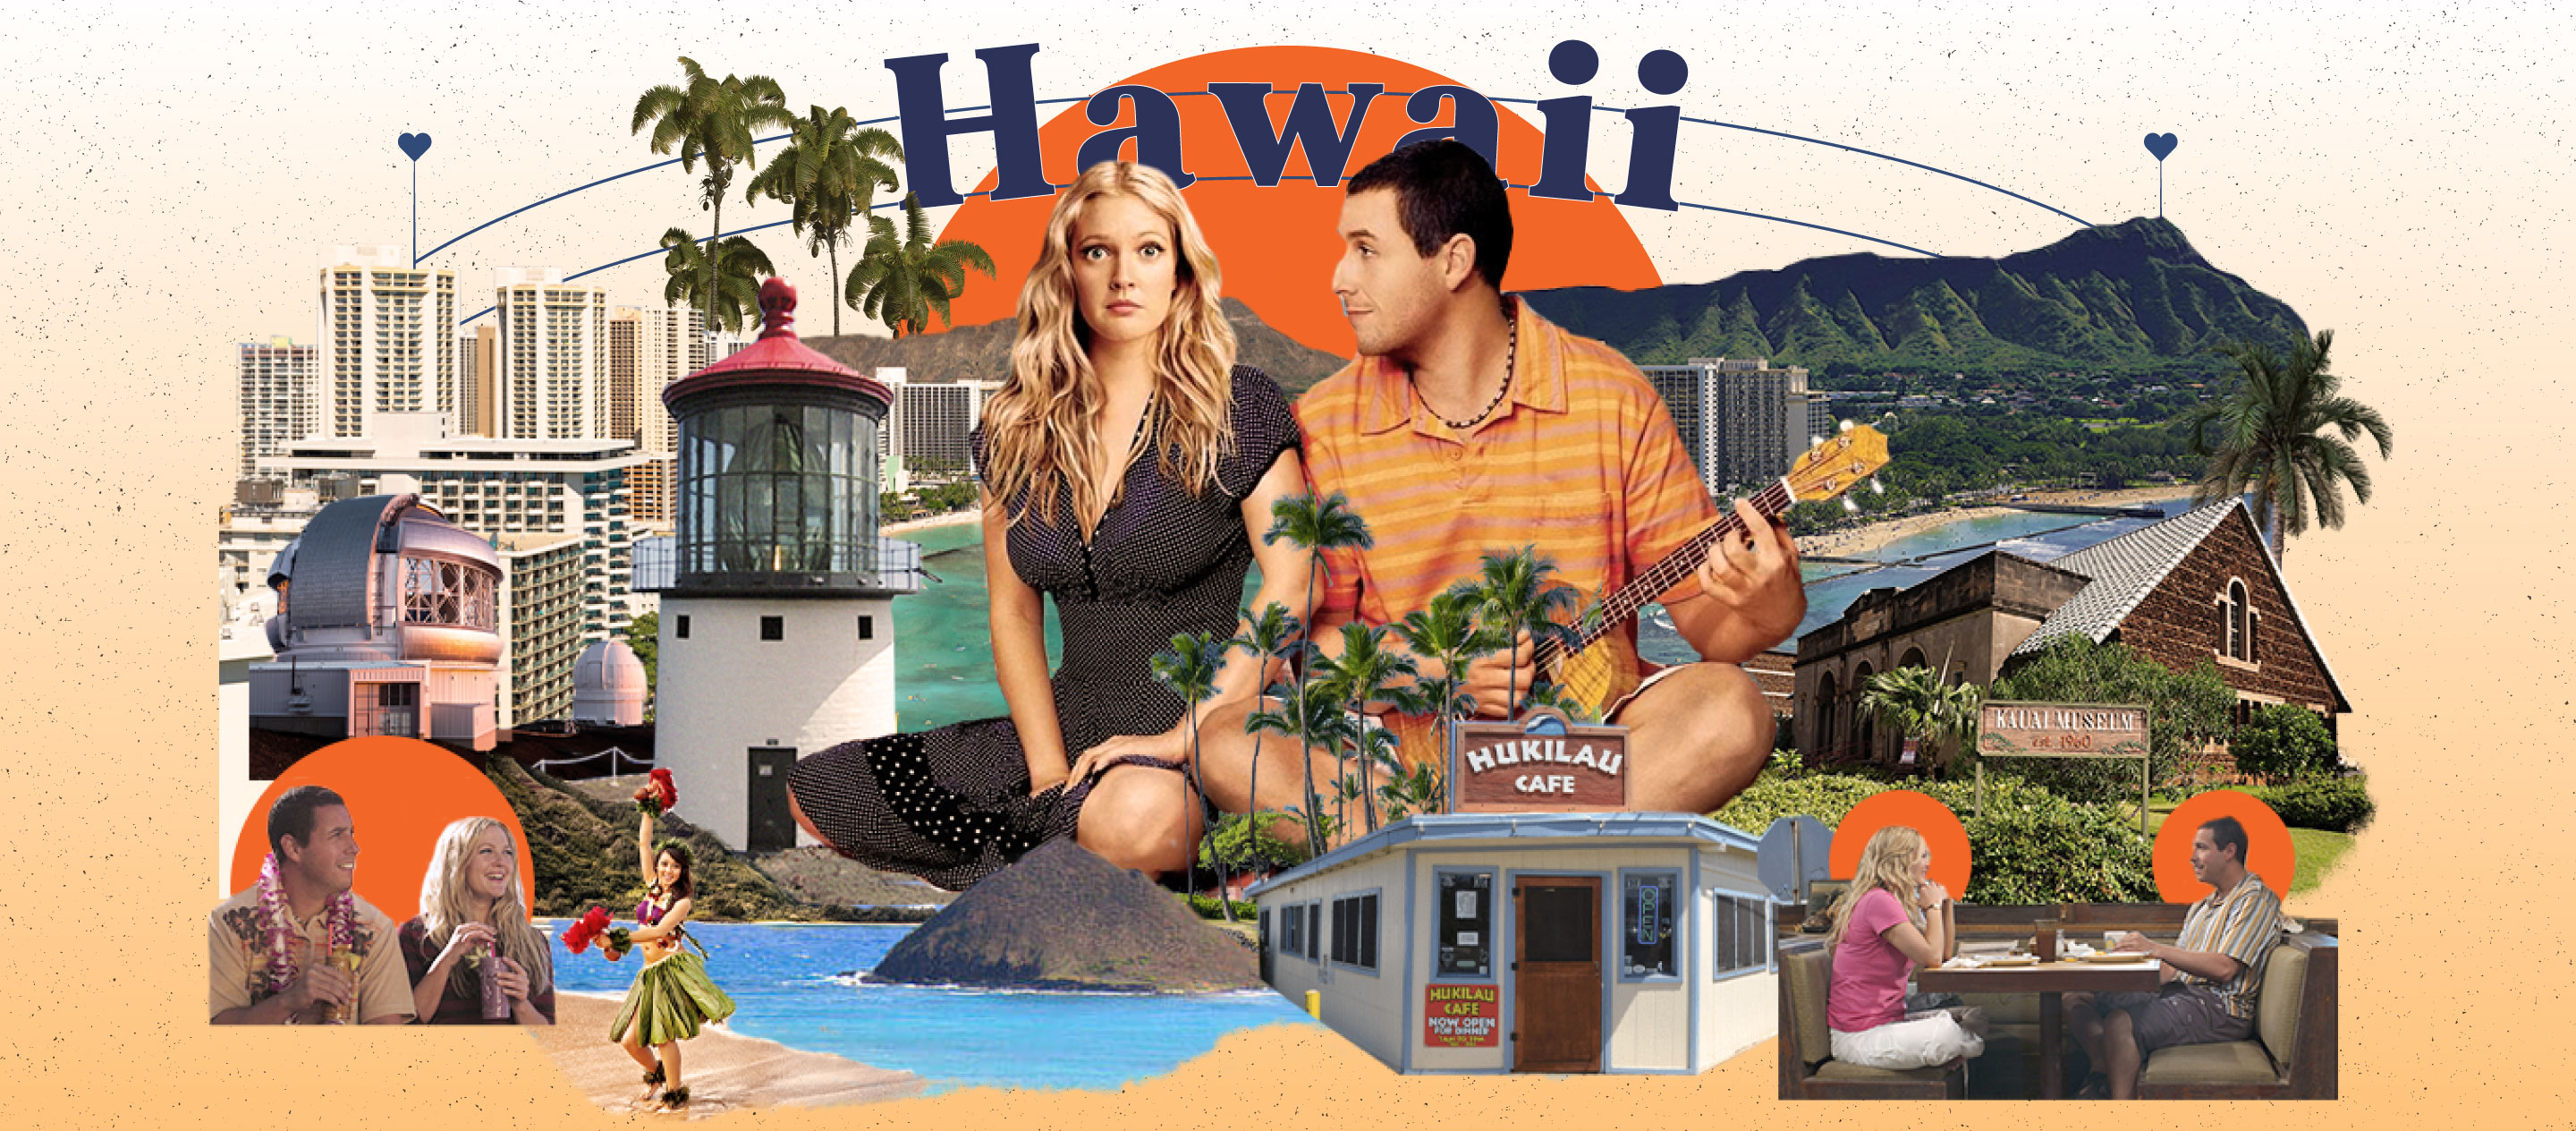 Hawaii เกาะสวรรค์ใน 50 First Dates ที่ดึงดูดใจชาวเมืองด้วยธรรมชาติและคุณภาพชีวิตติดอันดับโลก